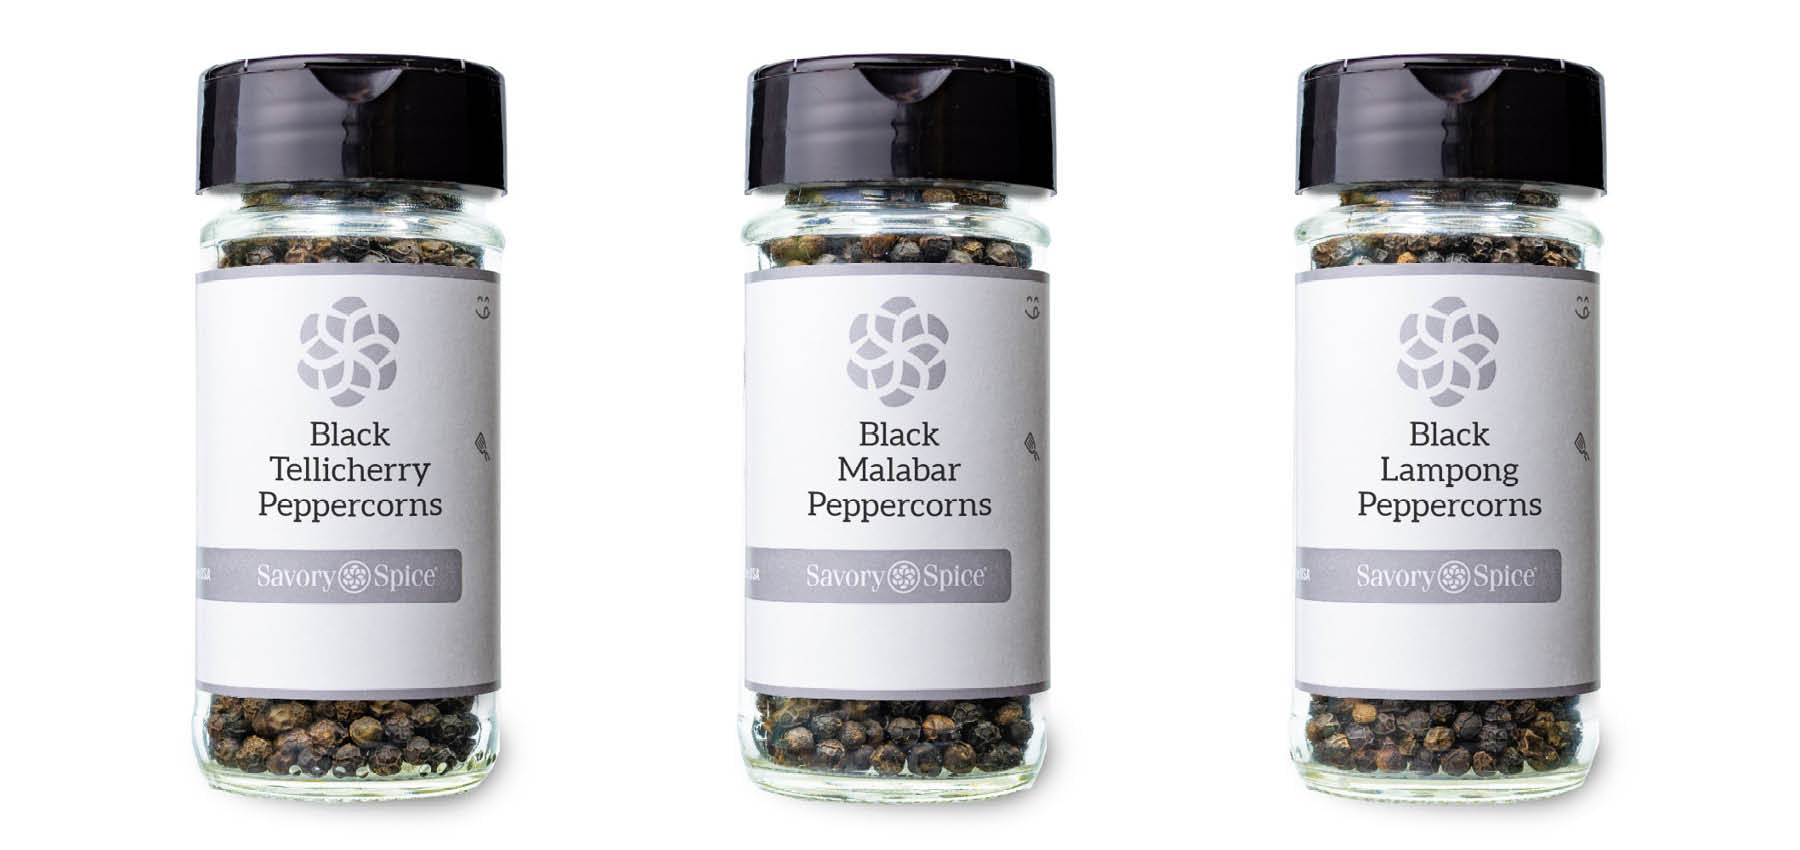 Jars of Black Tellicherry, Malabar, and Lampong Peppercorns